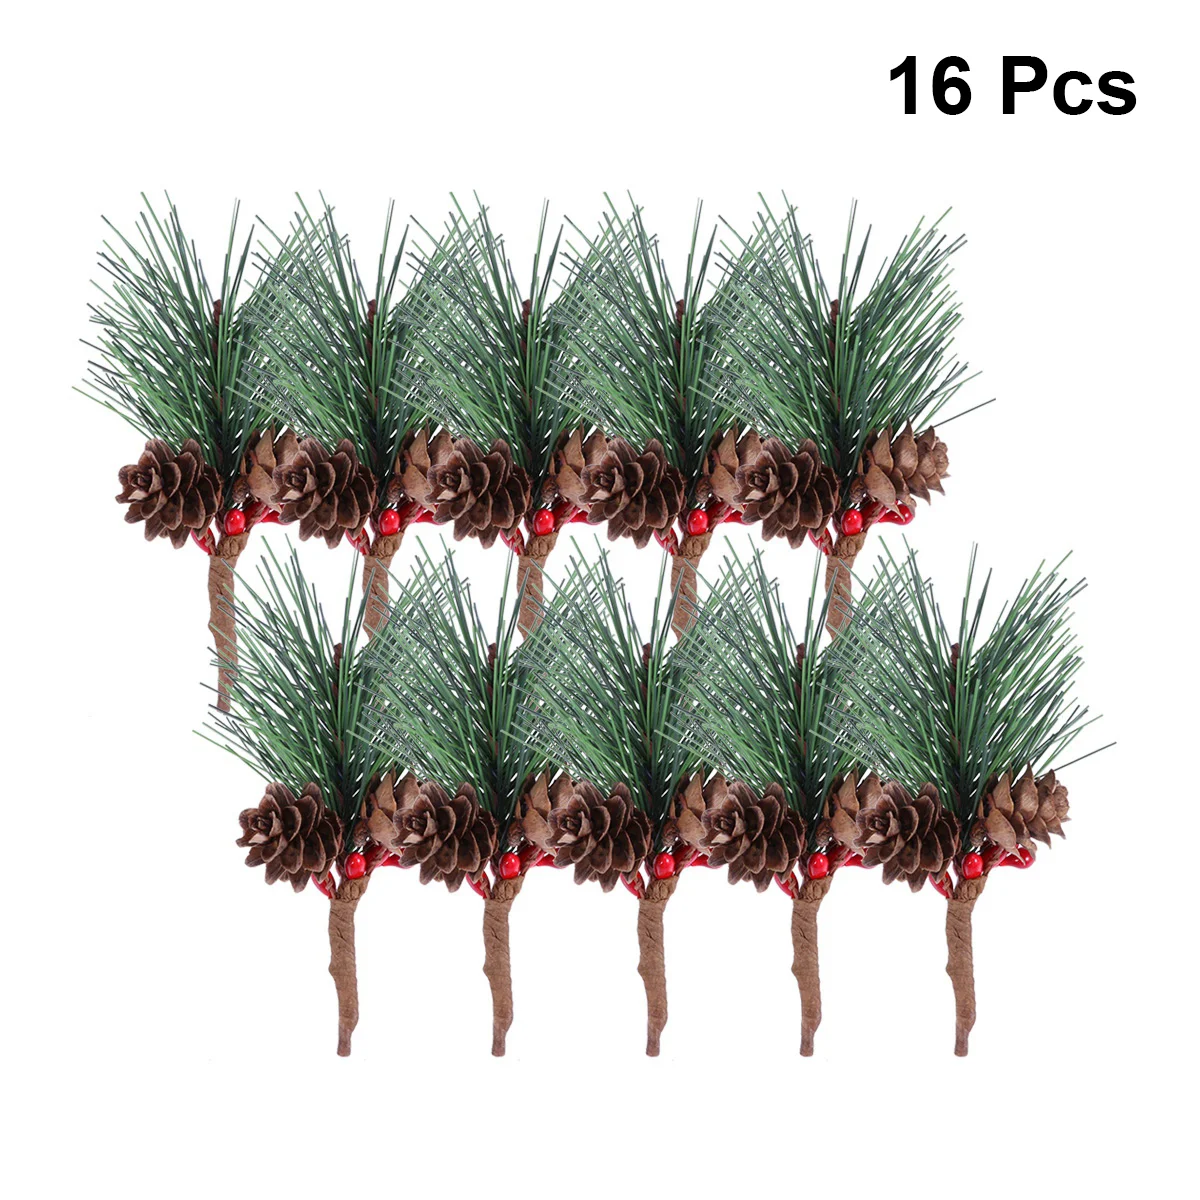 

16pcs Artificial Pine Picks Christmas Floral Picks Berry Stems Pine Branches Pine Branch Xmas Pine Picks Pine Cone Picks